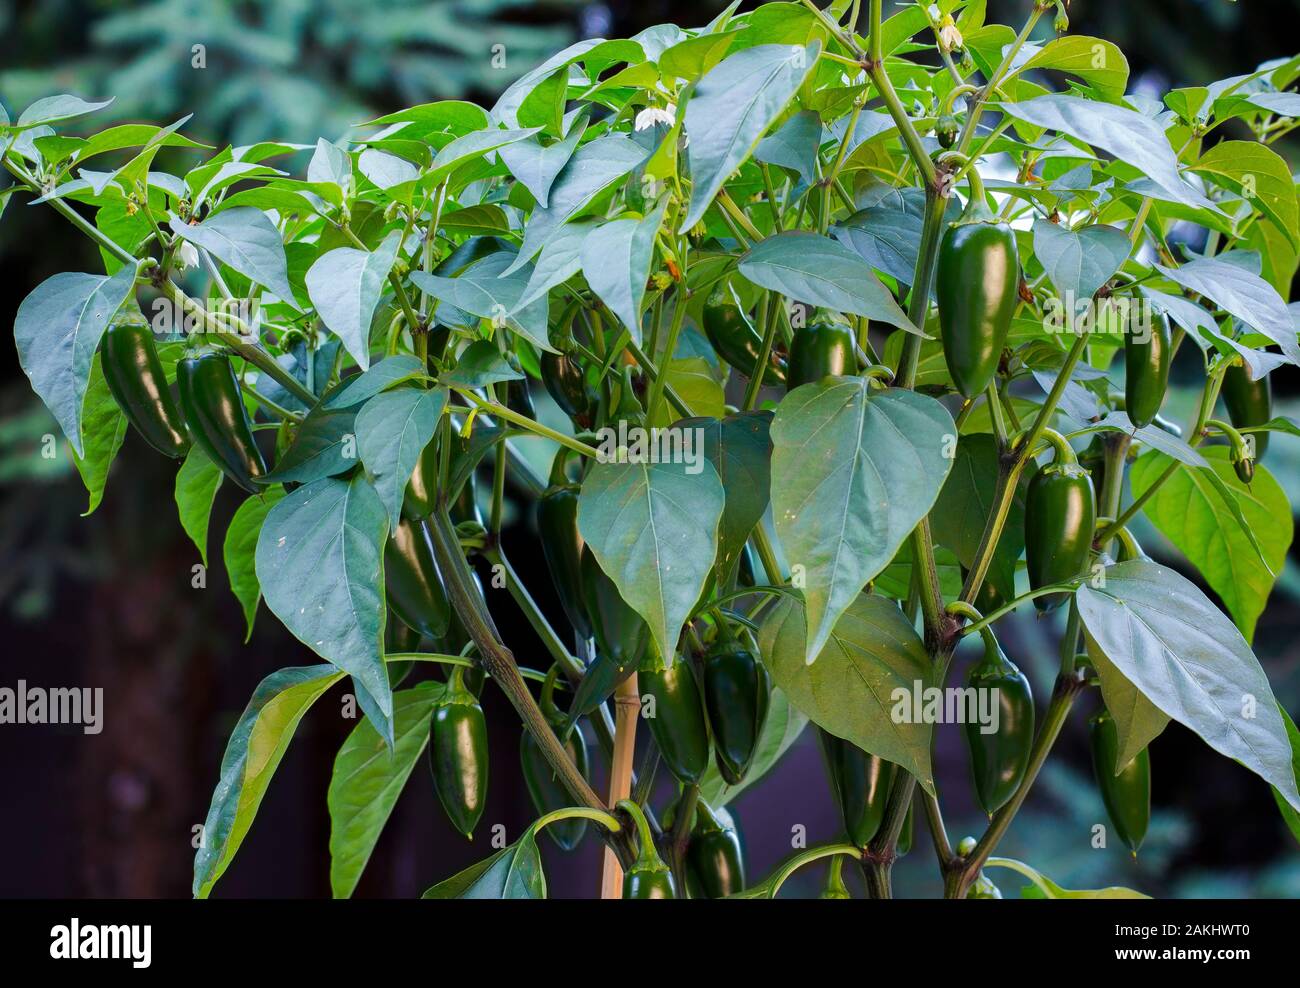 Organic jalapeño (Capsicum annuum) peppers on a jalapeno plant. Close-up photo. Stock Photo